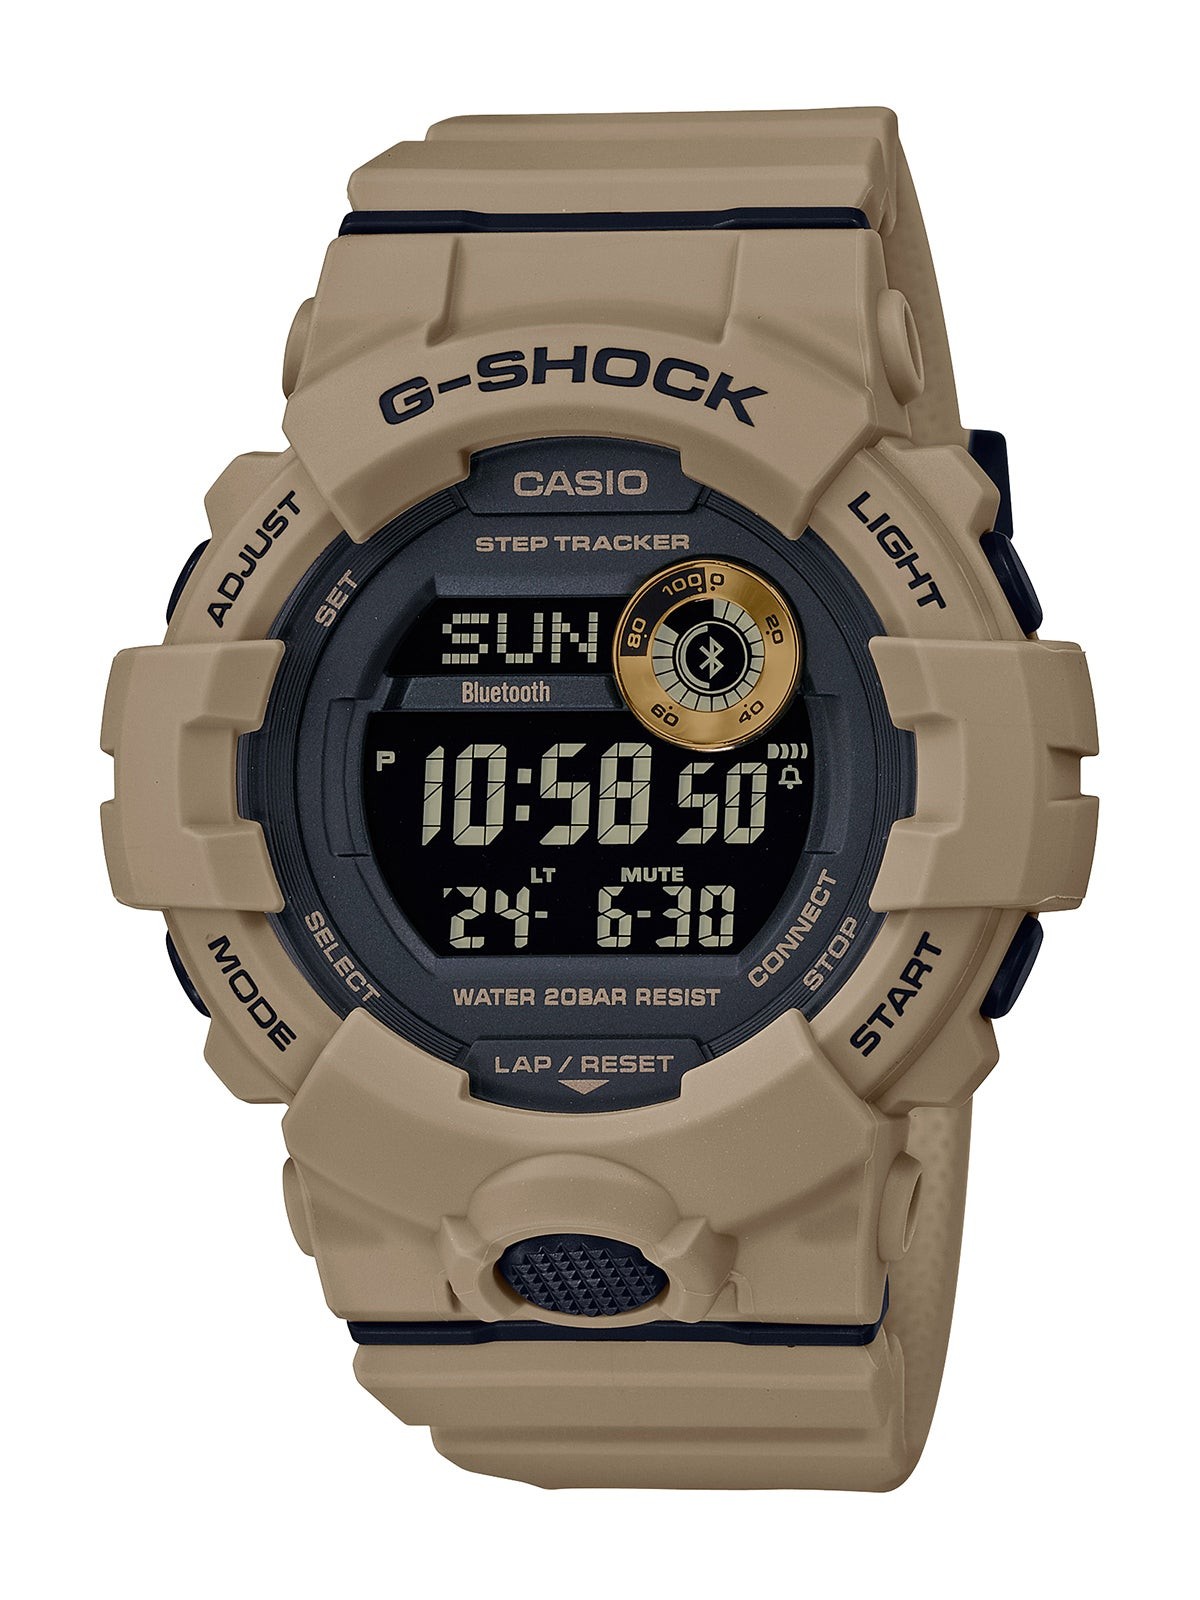 Mens G-Shock Power Trainer Bluetooth Digital Watch Tan